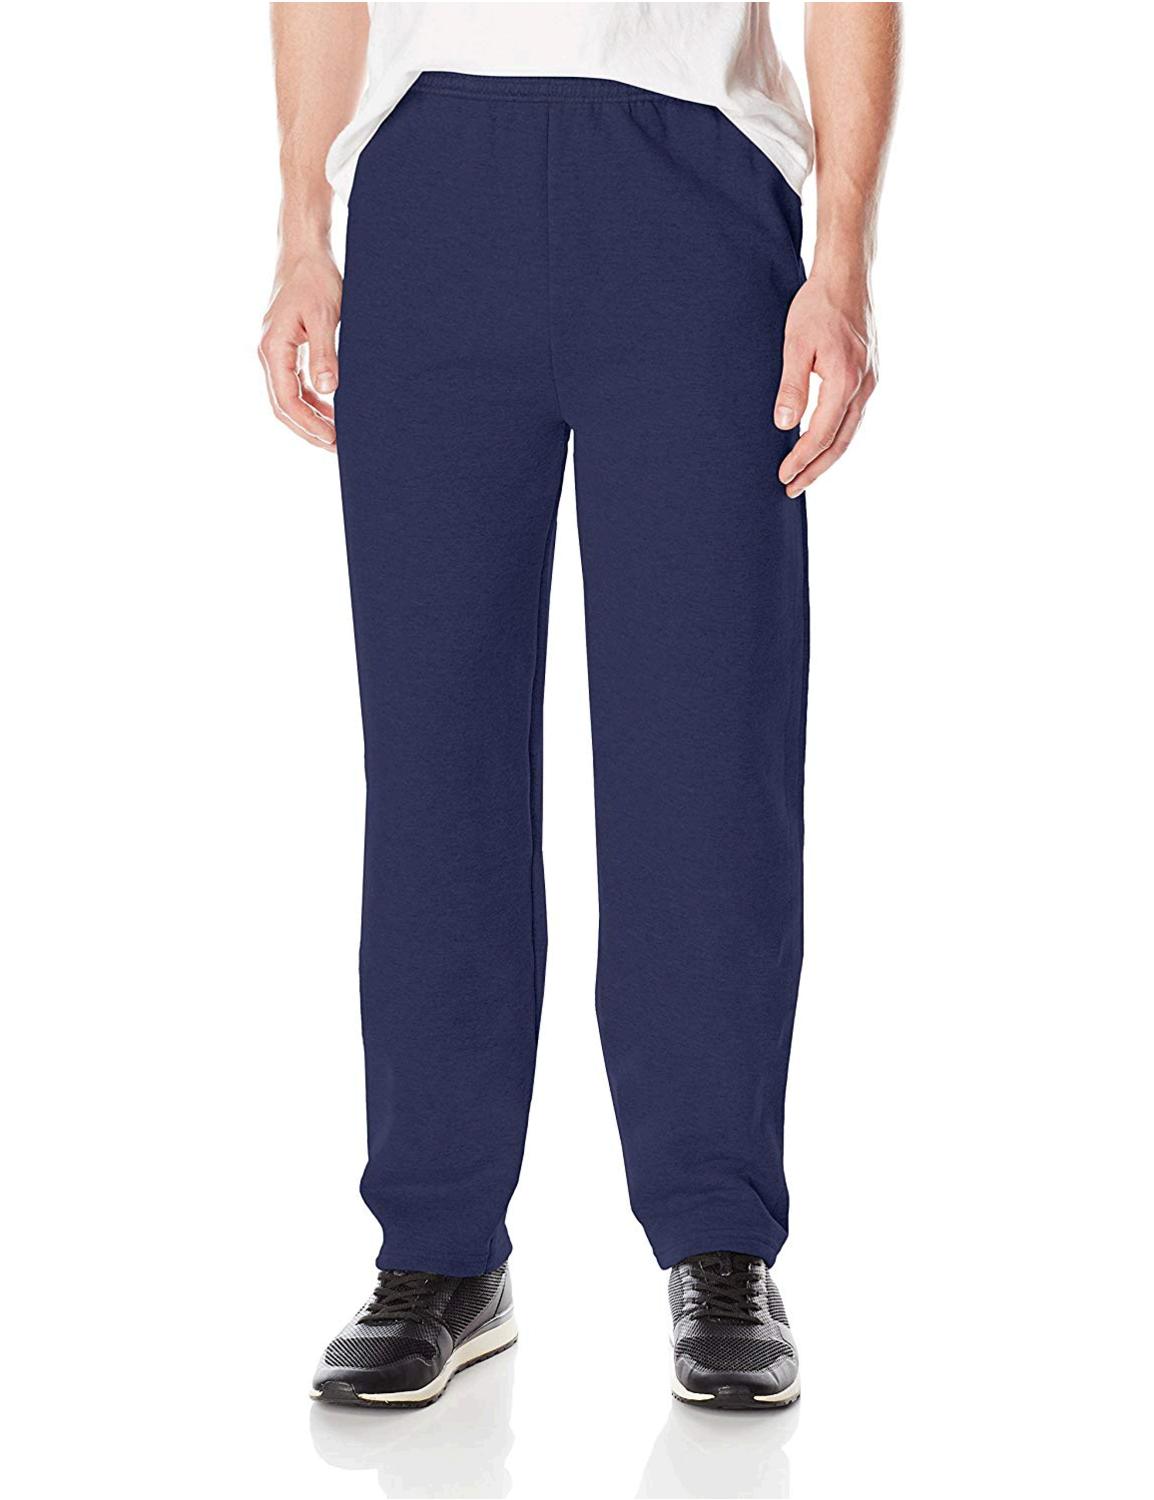 Hanes Men's Ecosmart Open Leg Fleece Pant with Pockets,, Navy, Size X ...